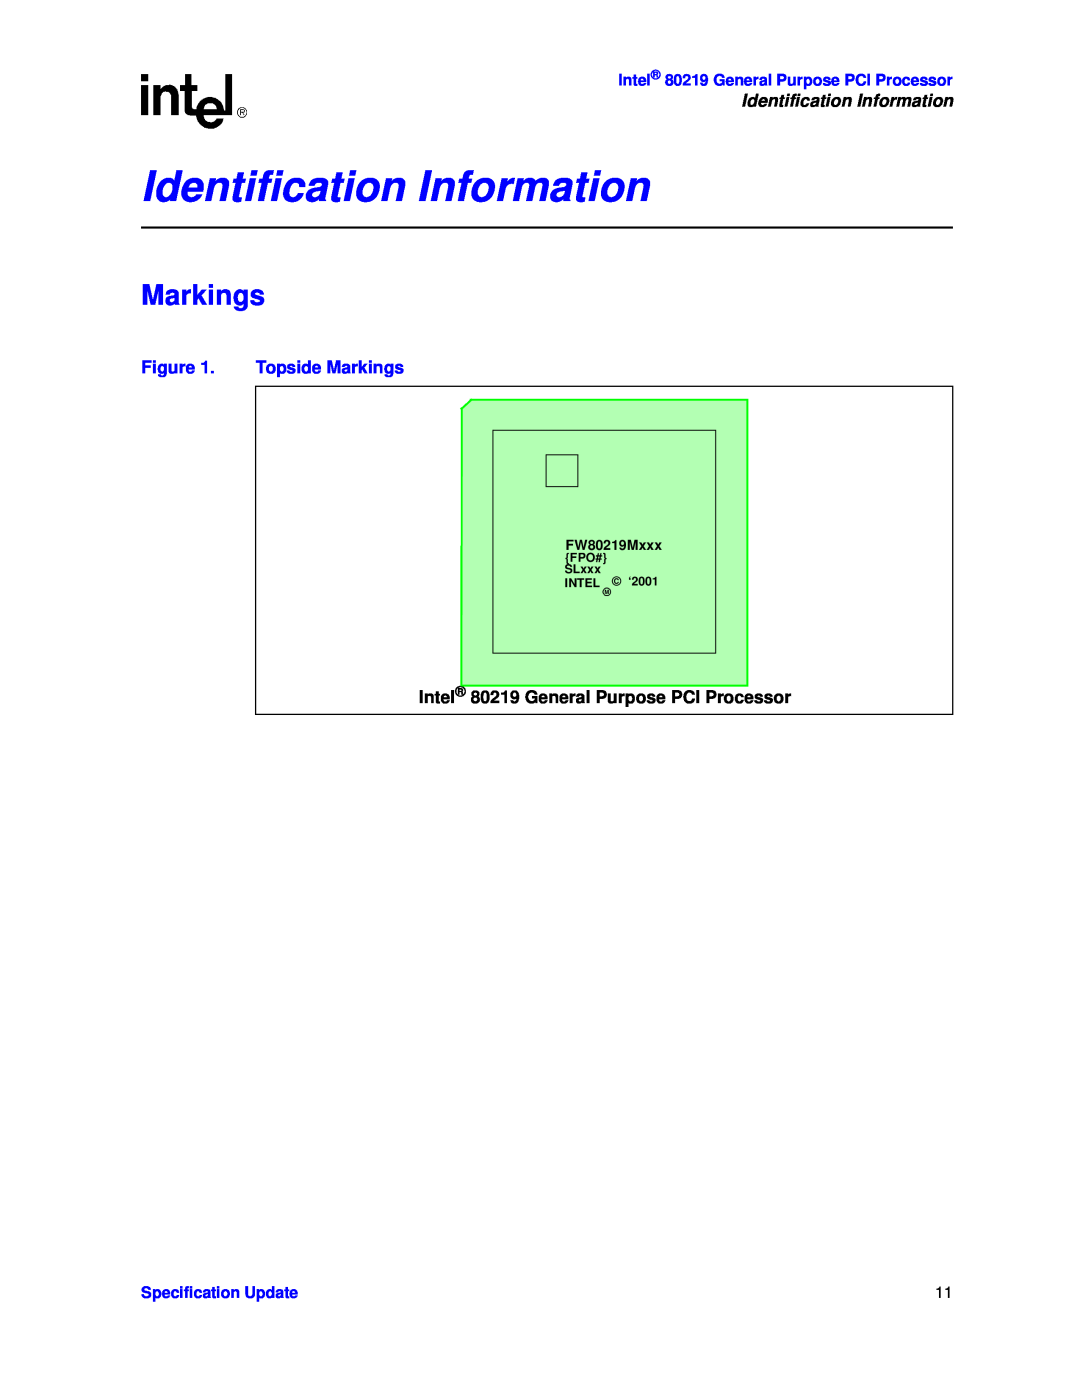 Intel Identification Information, Markings, Intel 80219 General Purpose PCI Processor, Specification Update 